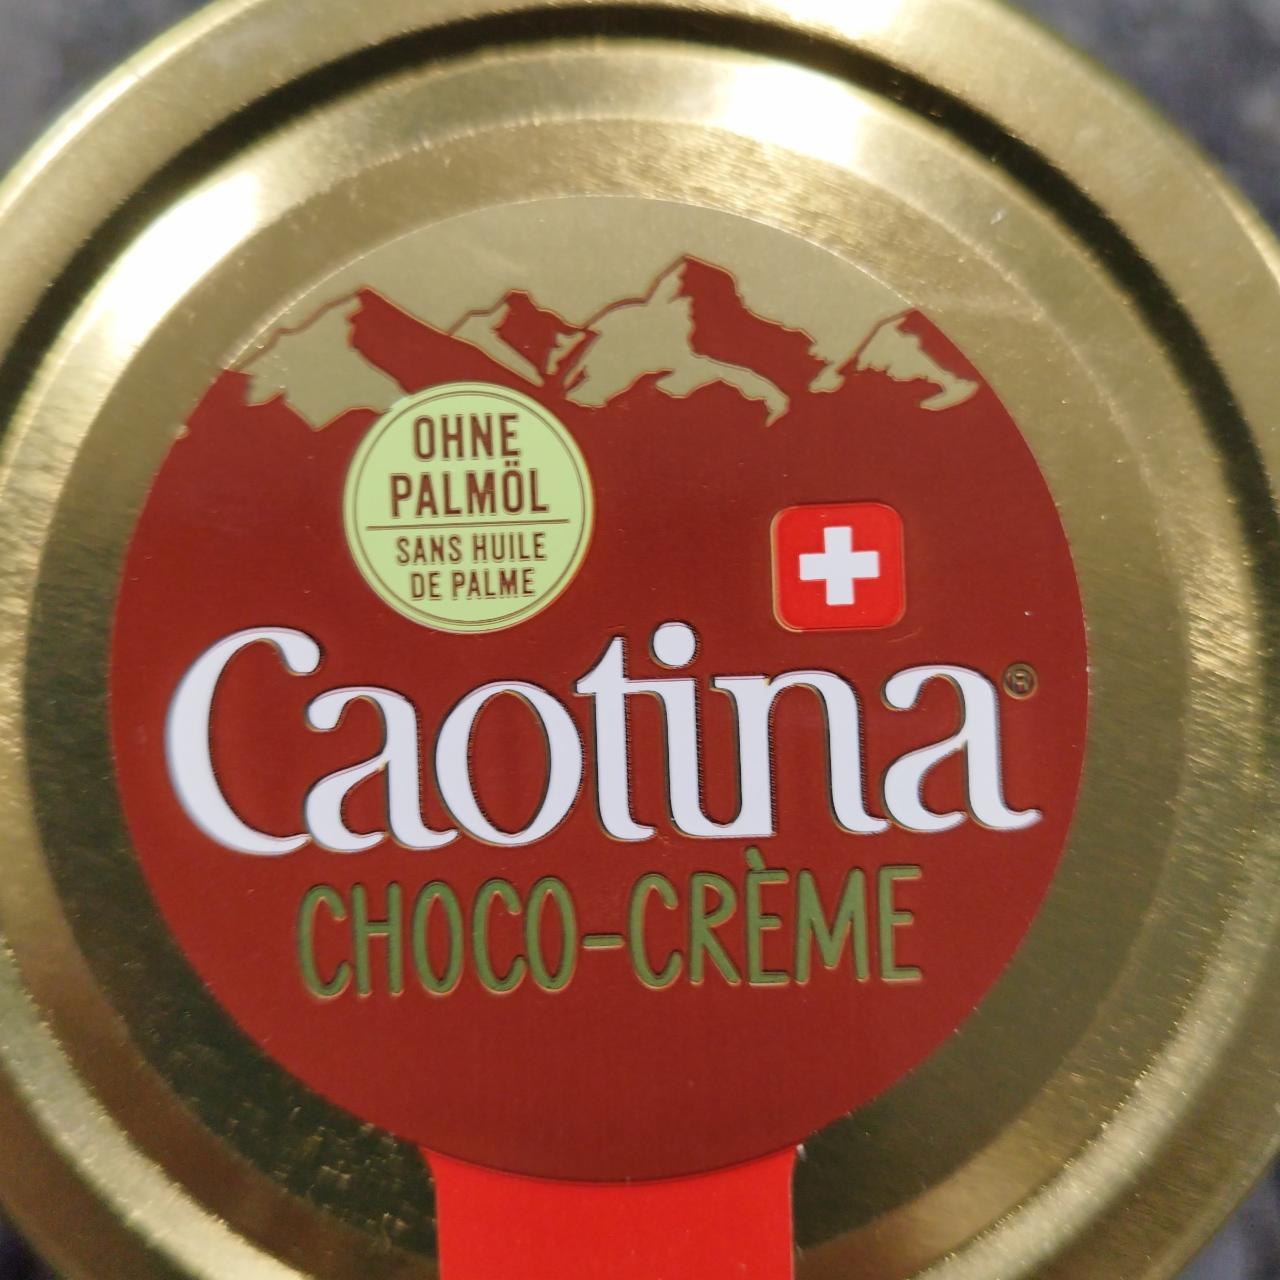 Fotografie - Choco-creme Caotina